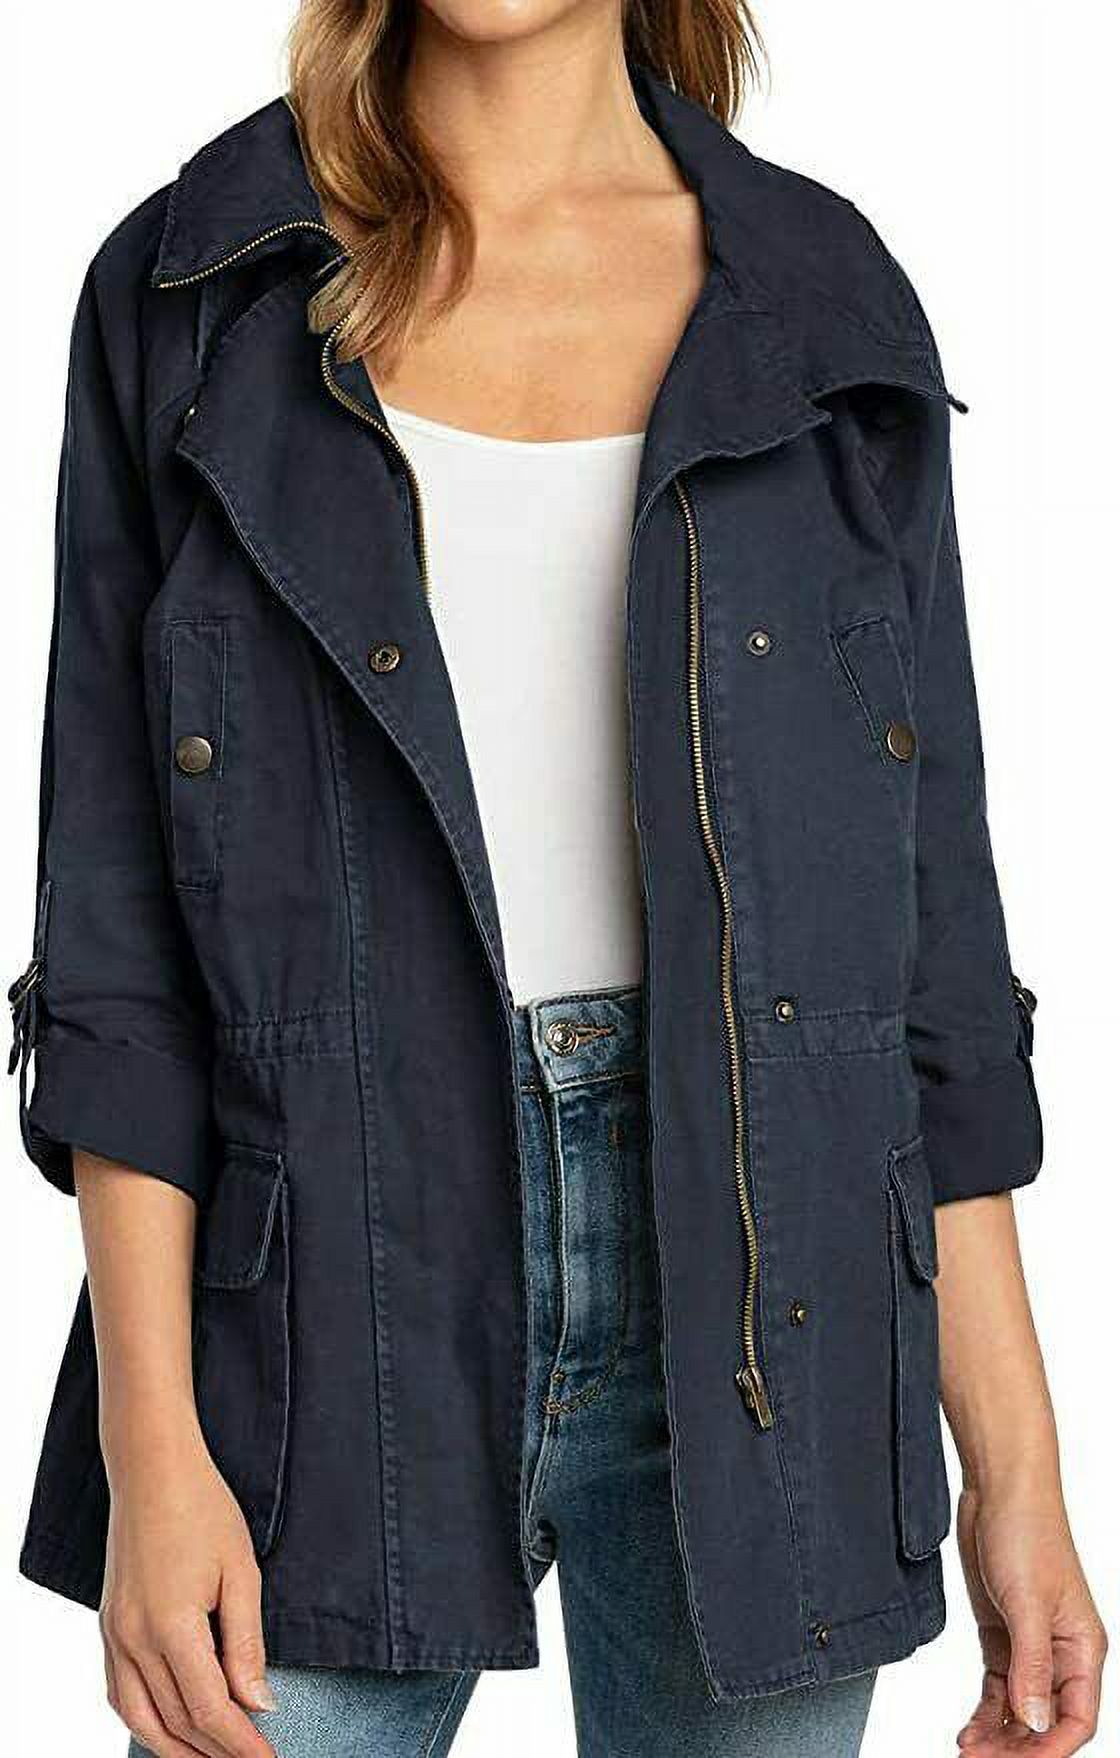 Matty M Ladies' Anorak Jacket (Navy, Medium) - image 3 of 3